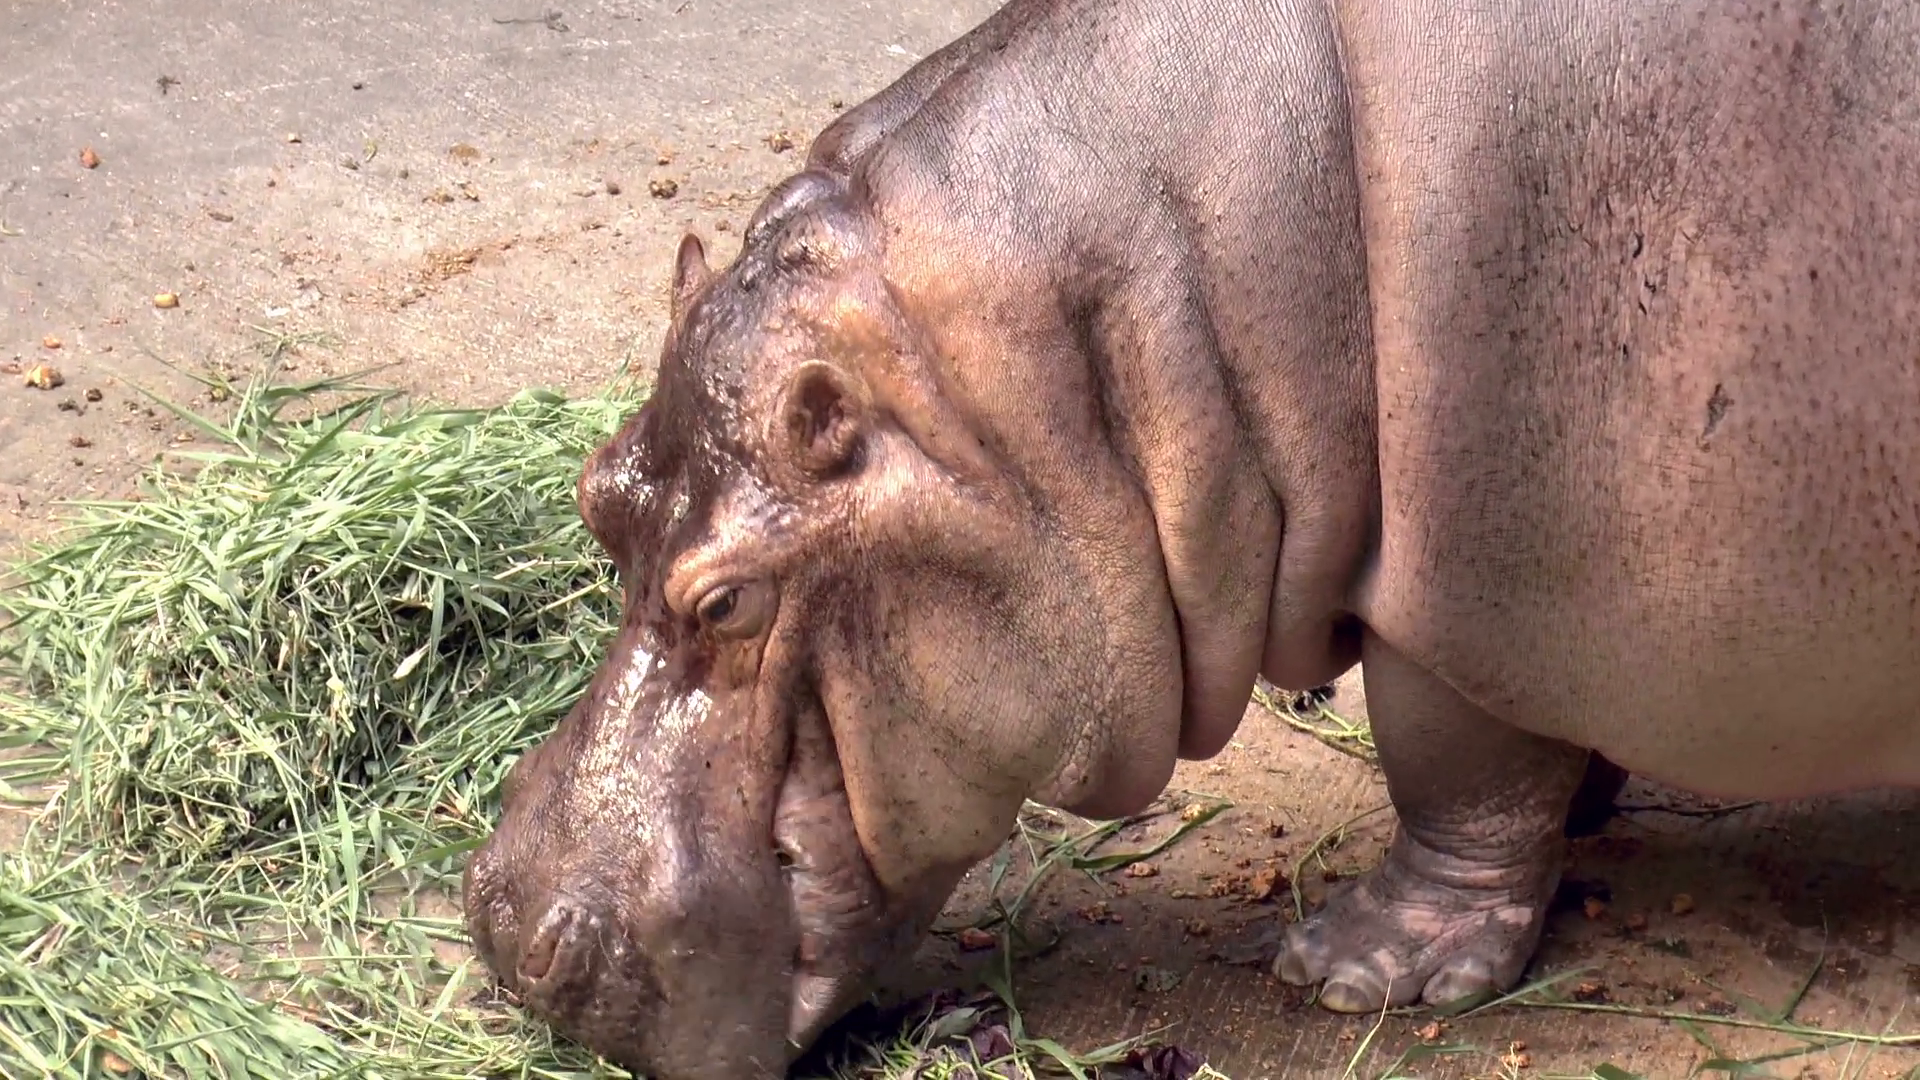 hippo close up - hippopotamus, river horse eating grass close up HD ...